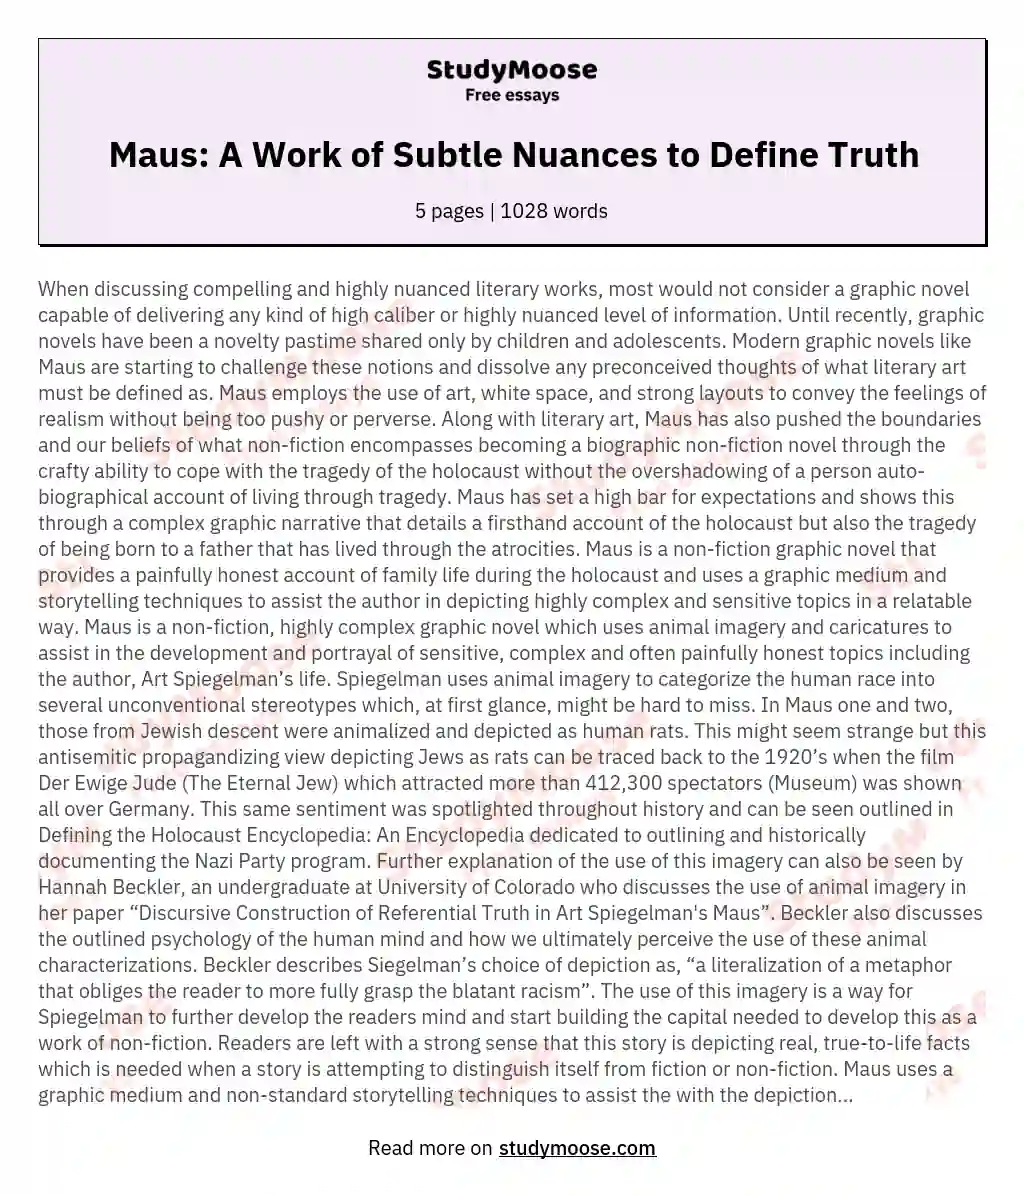 Maus: A Work of Subtle Nuances to Define Truth essay